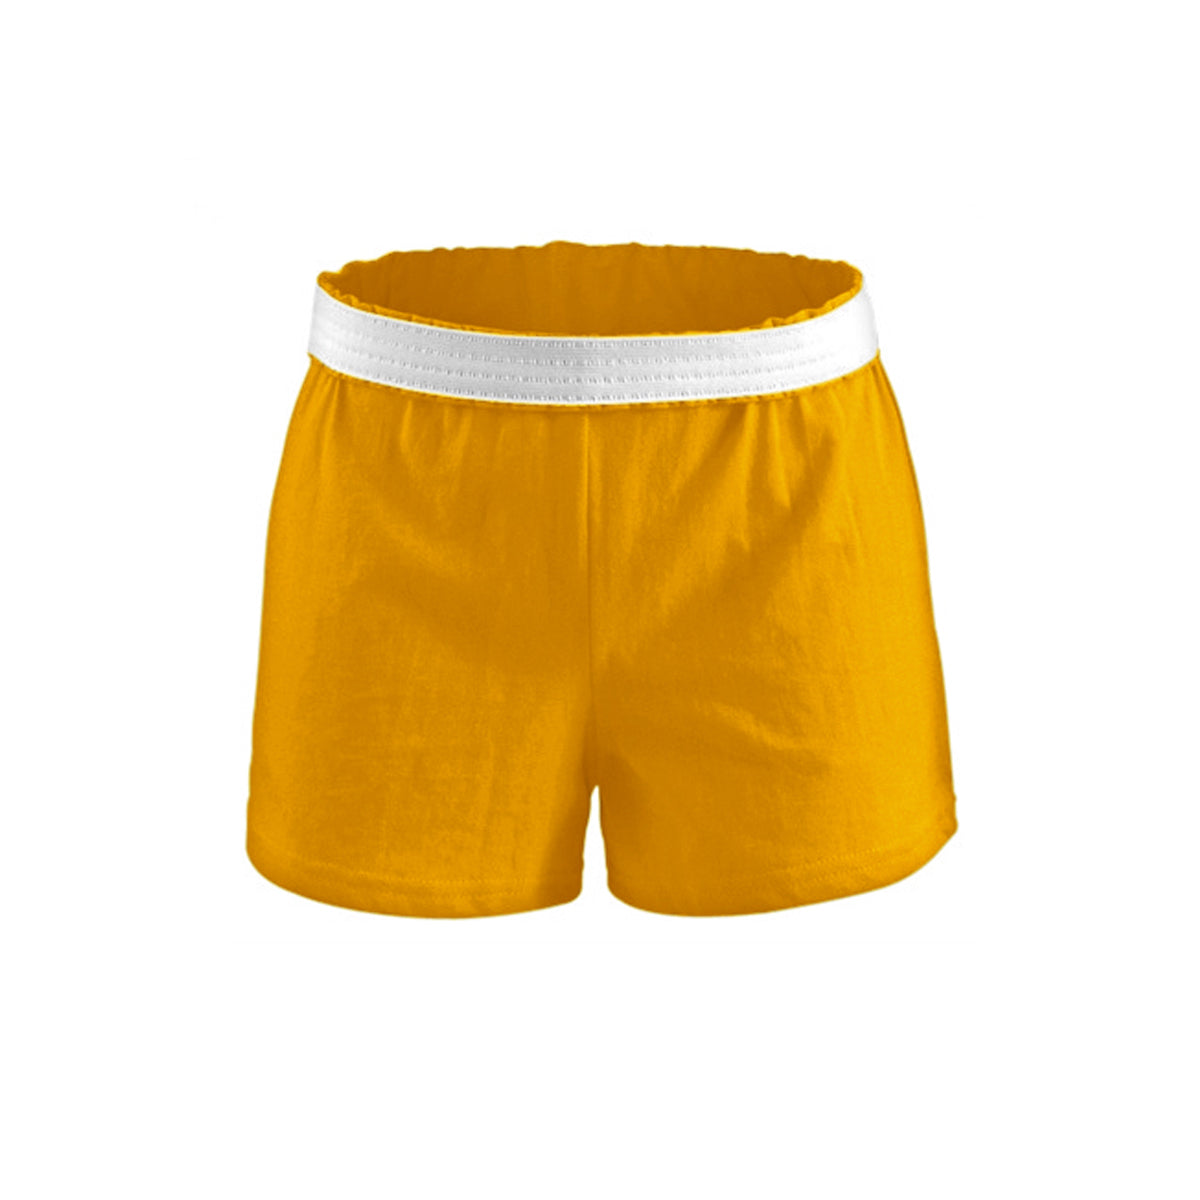 Sussex Middle Design 5 Shorts